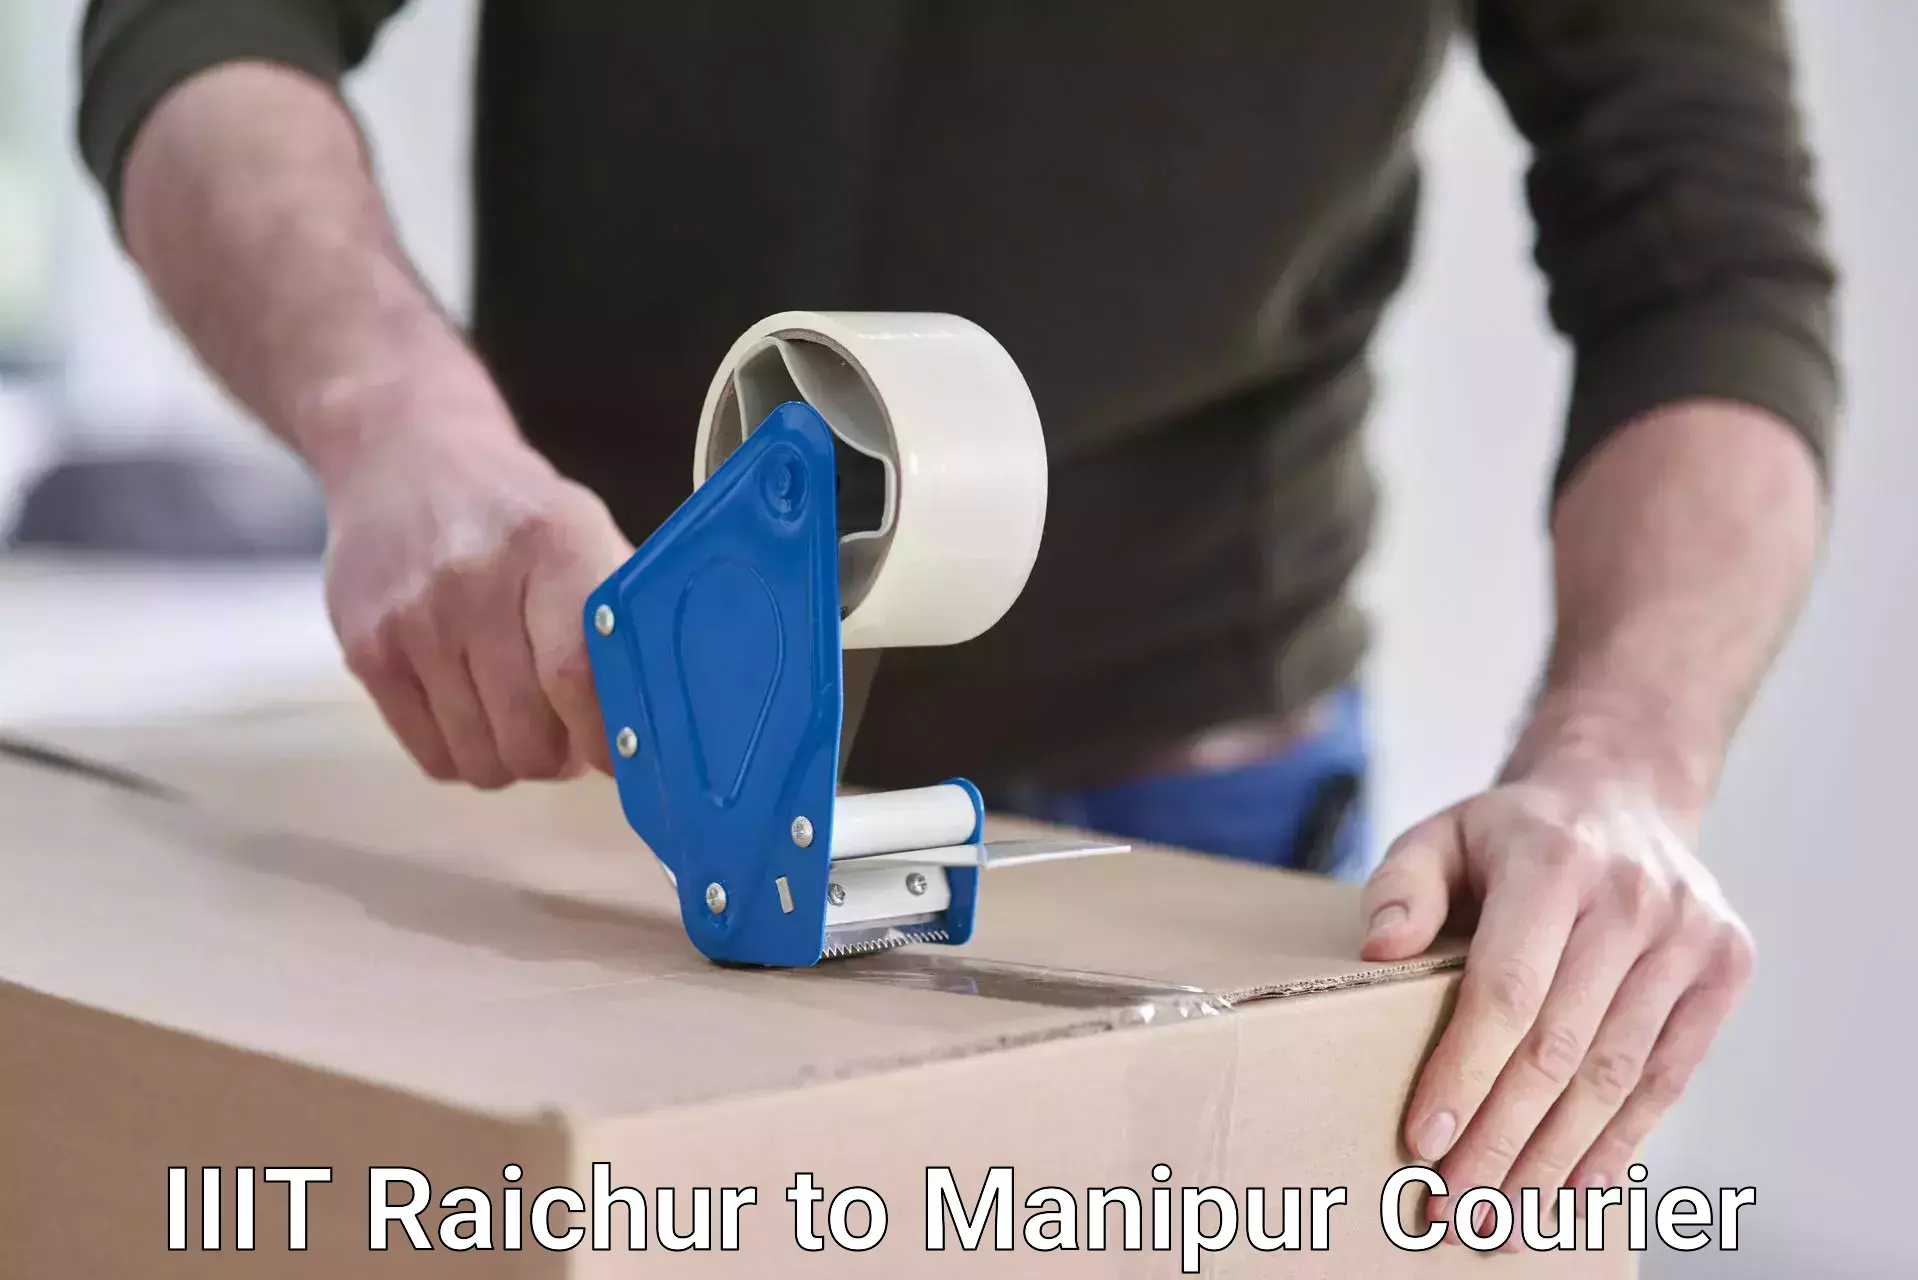 Courier service innovation IIIT Raichur to Chandel